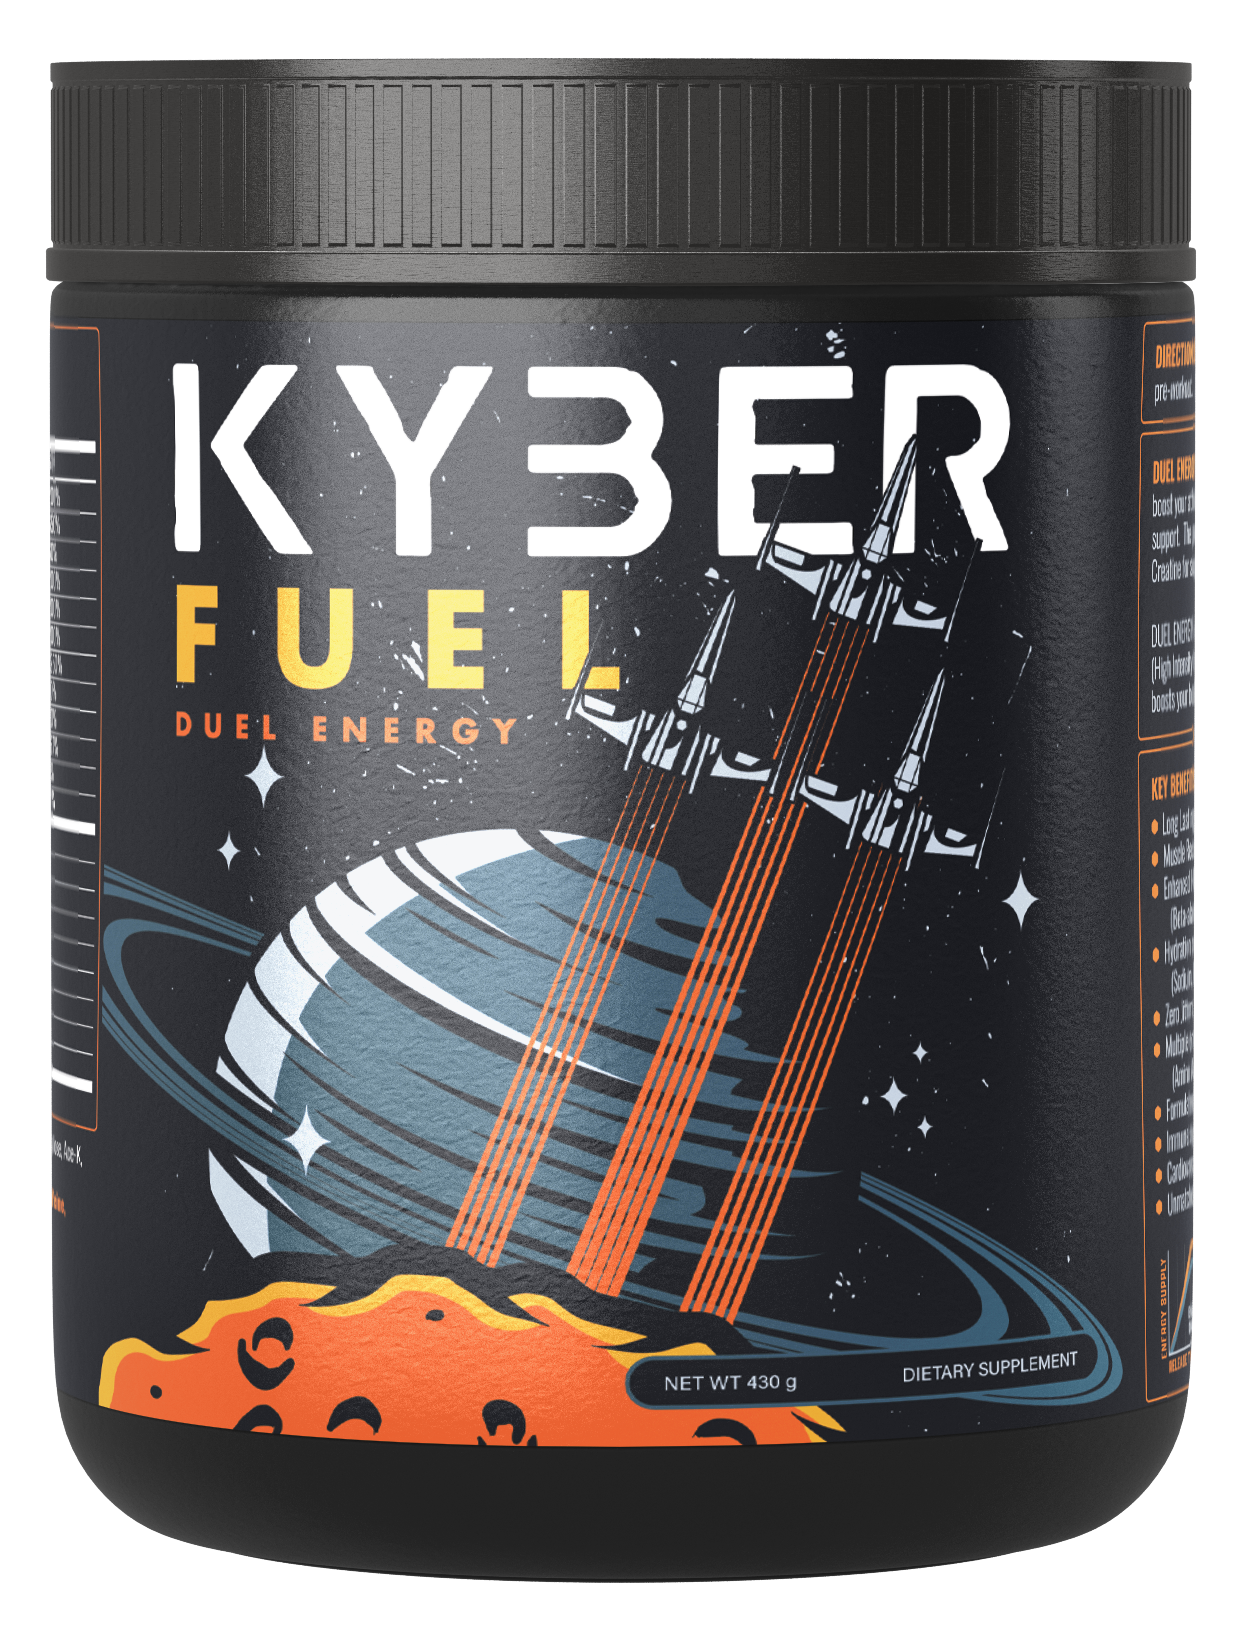 Kyber Fuel - Duel Fuel